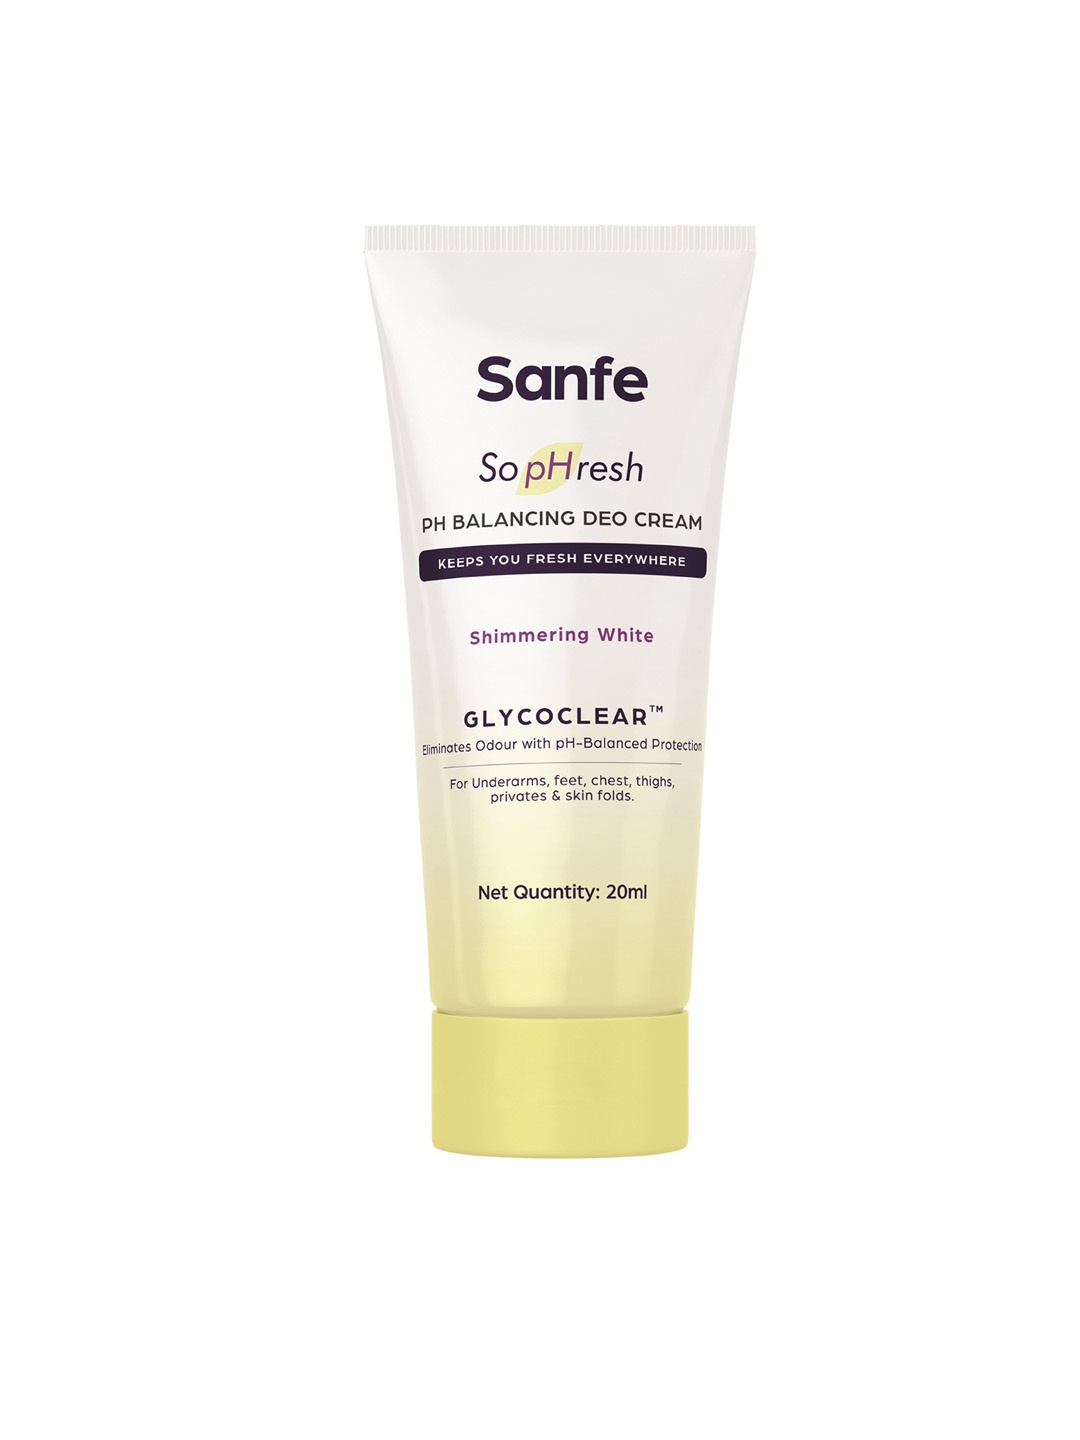 

Sanfe So pHresh GLYCOCLEAR pH Balancing Deo Cream 20 ml - Shimmering White, Yellow